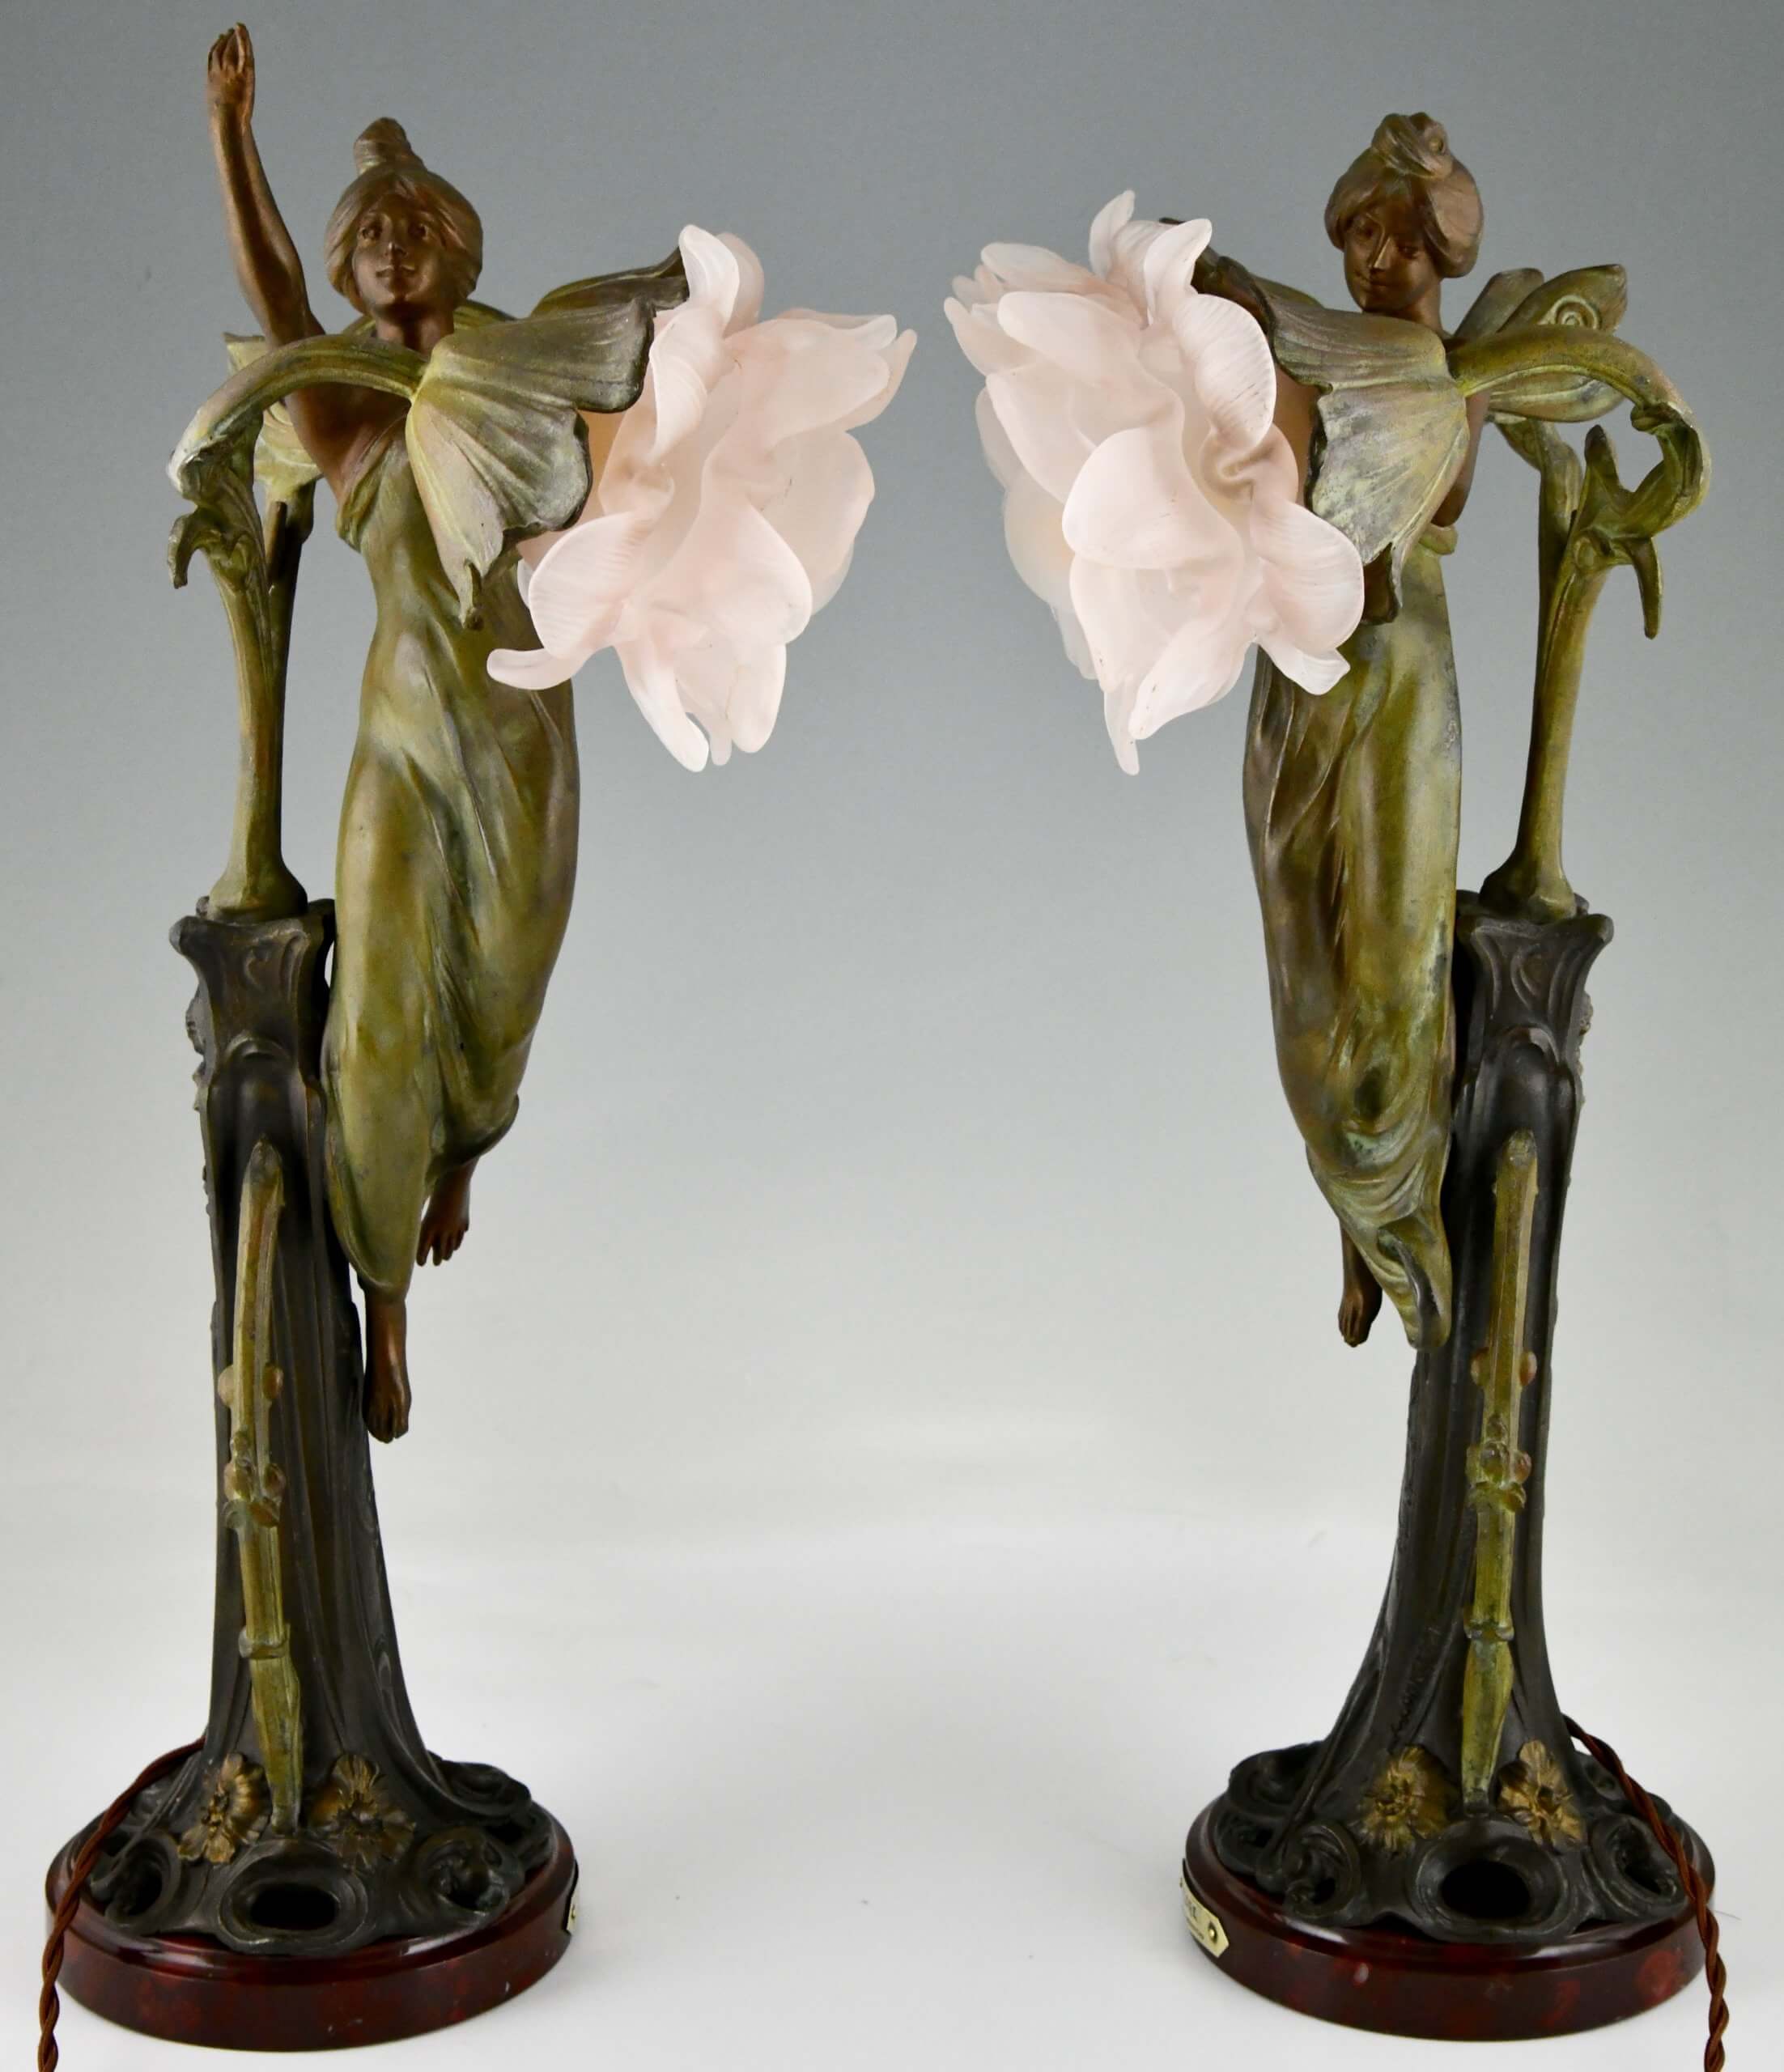 Pair of Art Nouveau lamps ladies and flowers